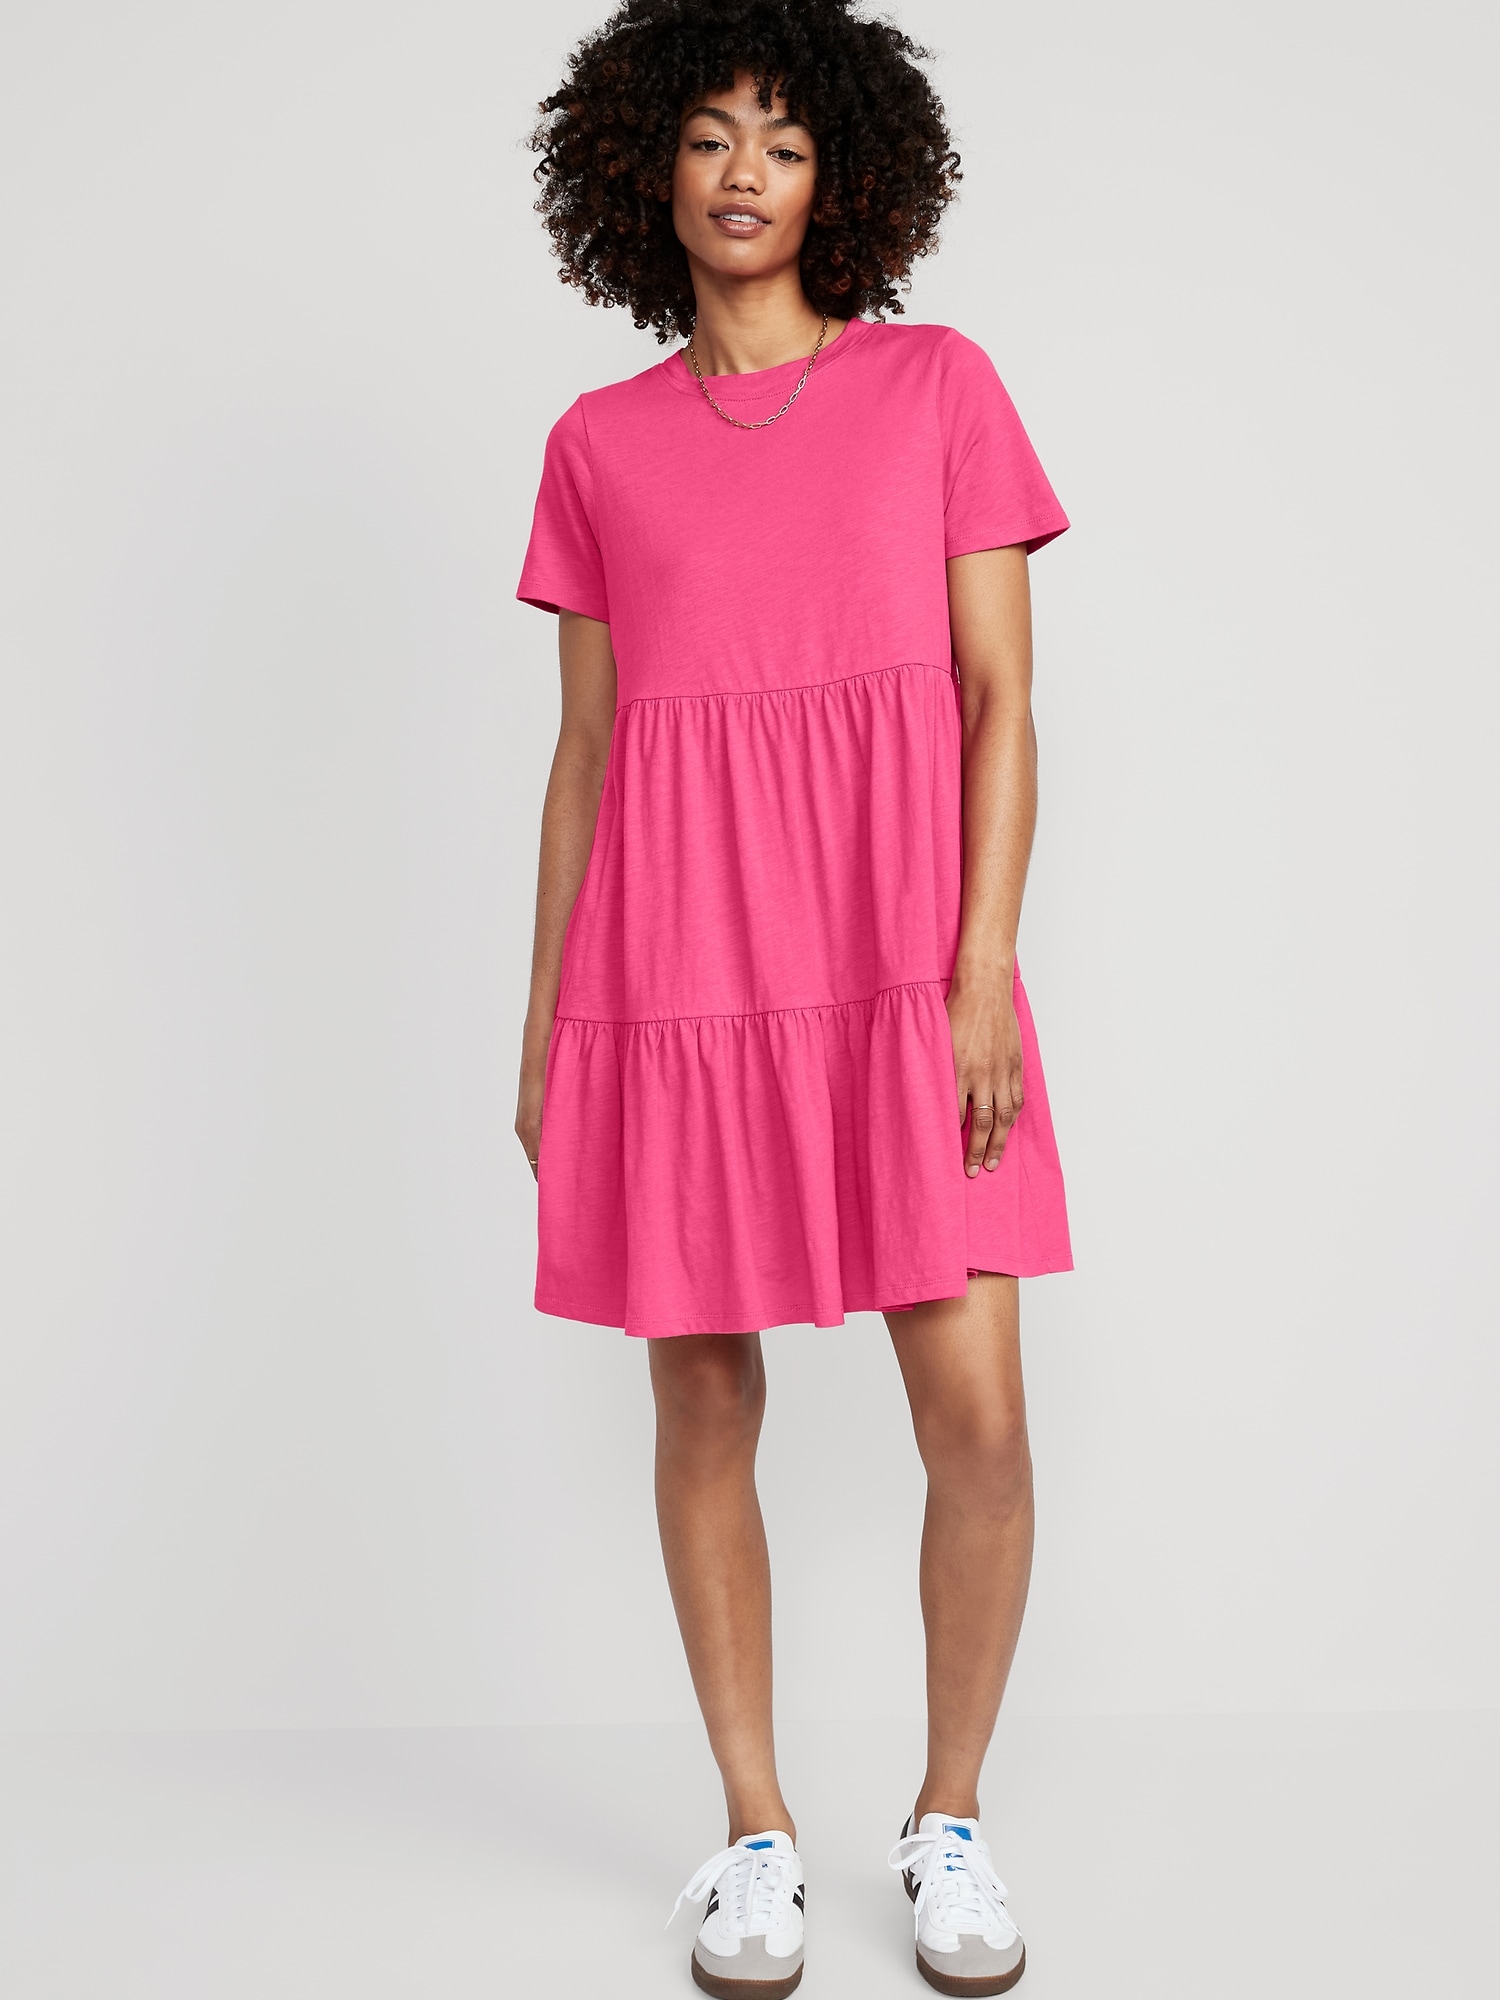 Old Navy EveryWear Slub-Knit Tiered Mini T-Shirt Swing Dress for Women pink. 1